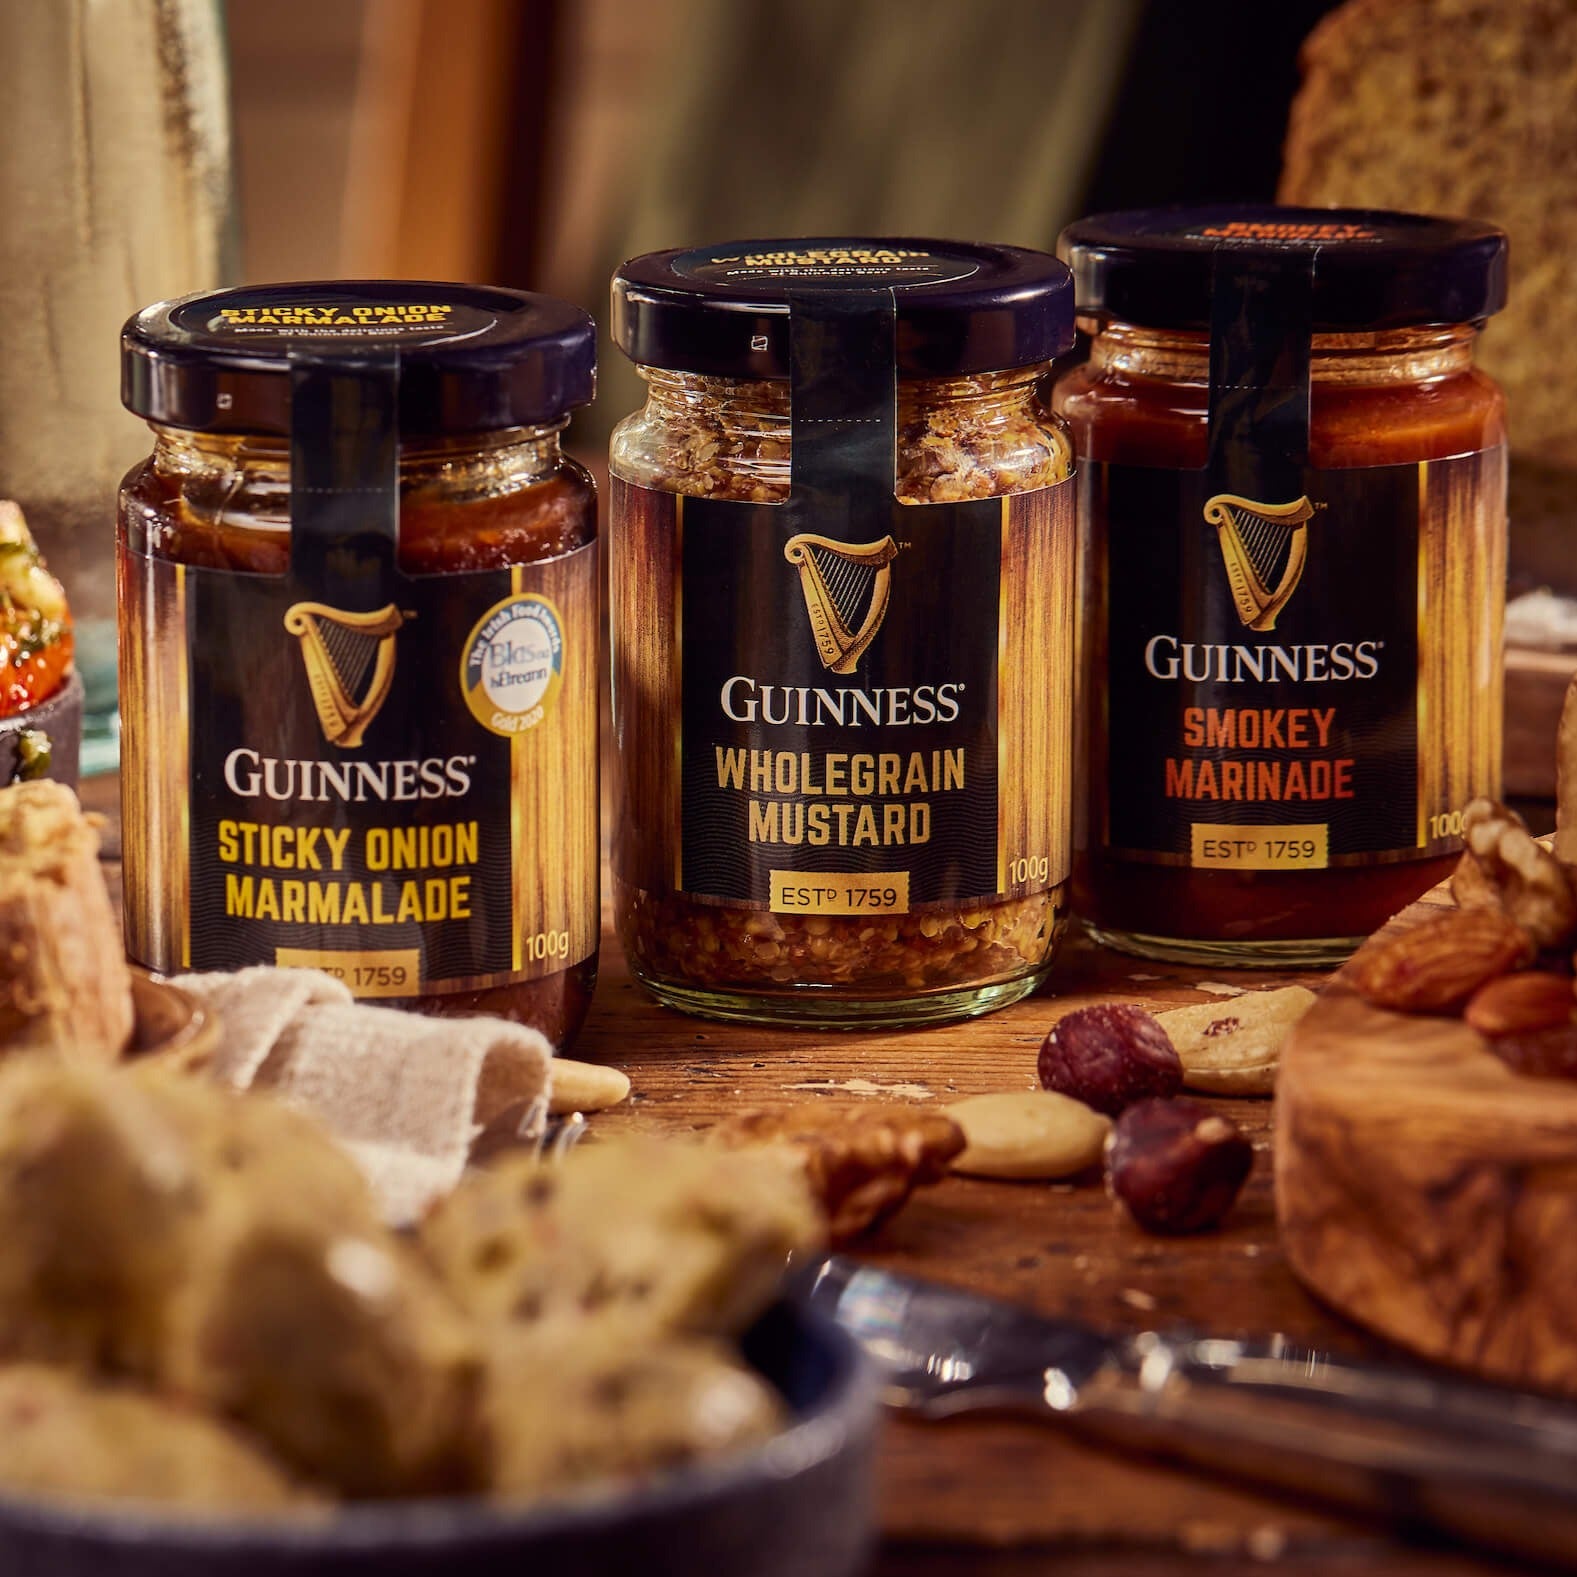 Guinness home made sticky onion marmalade, wholegrain mustard and smokey marinade from the All Irish Food hamper.